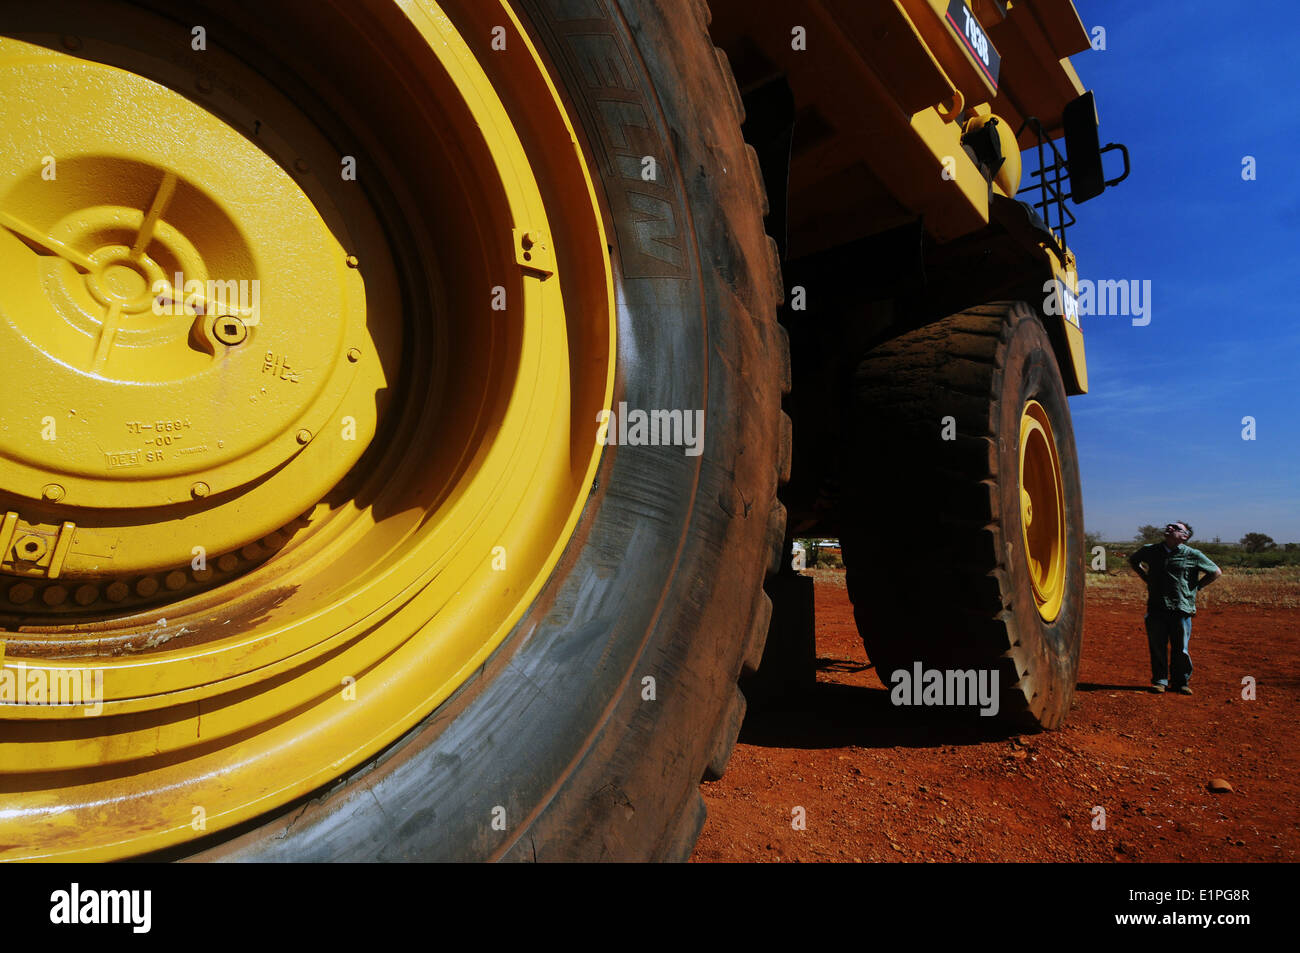 Man looking at enormous haulpak mining truck, Pilbara region, Western Australia. No MR or PR Stock Photo